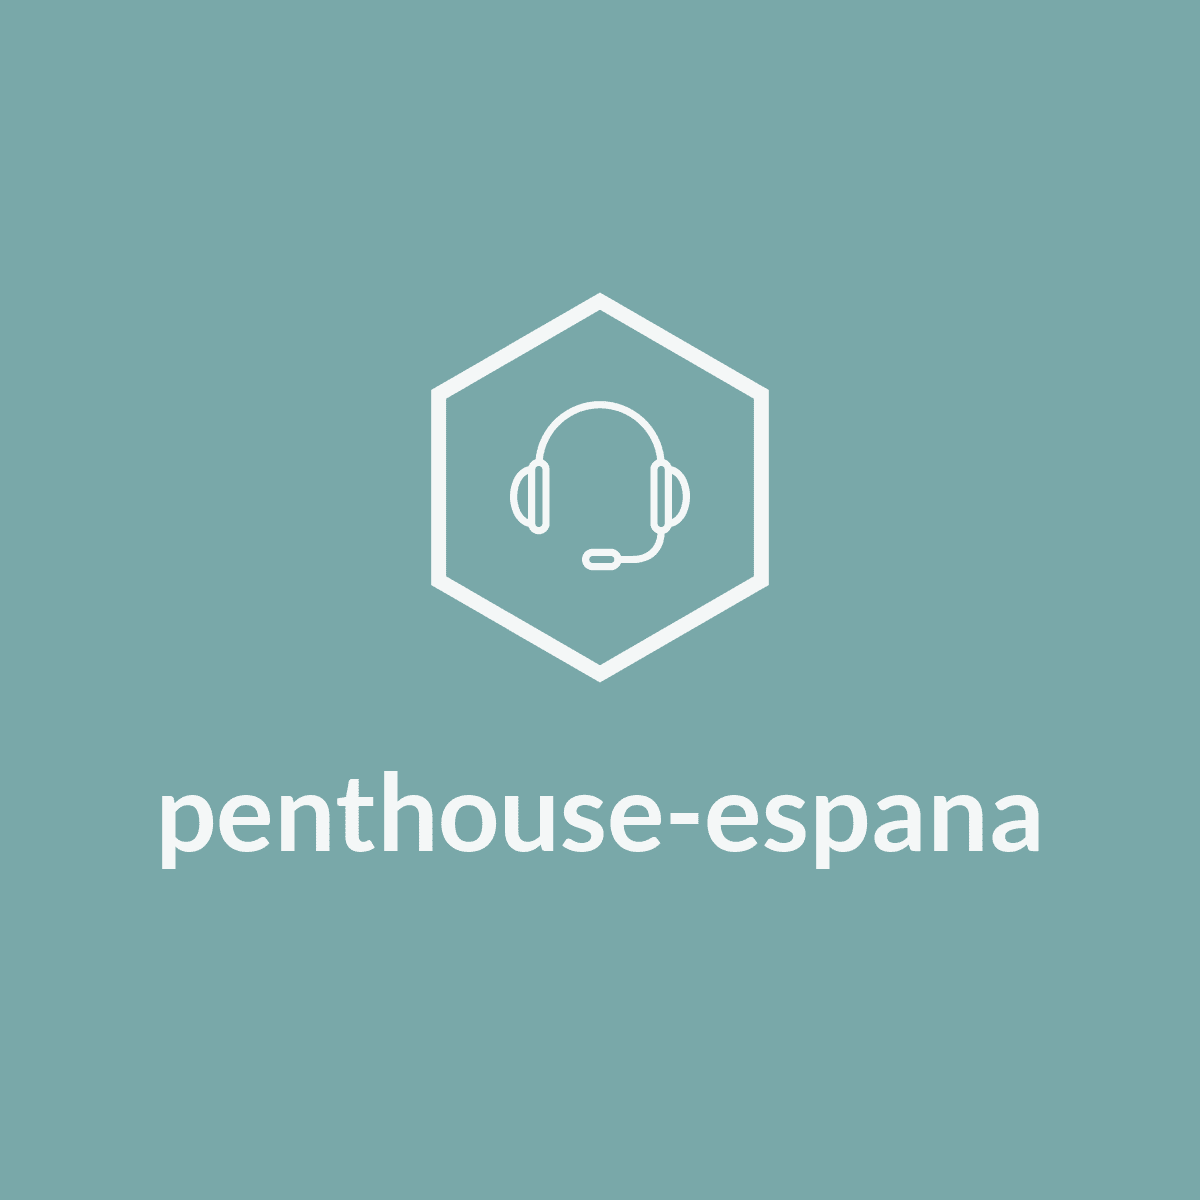 penthouse-espana